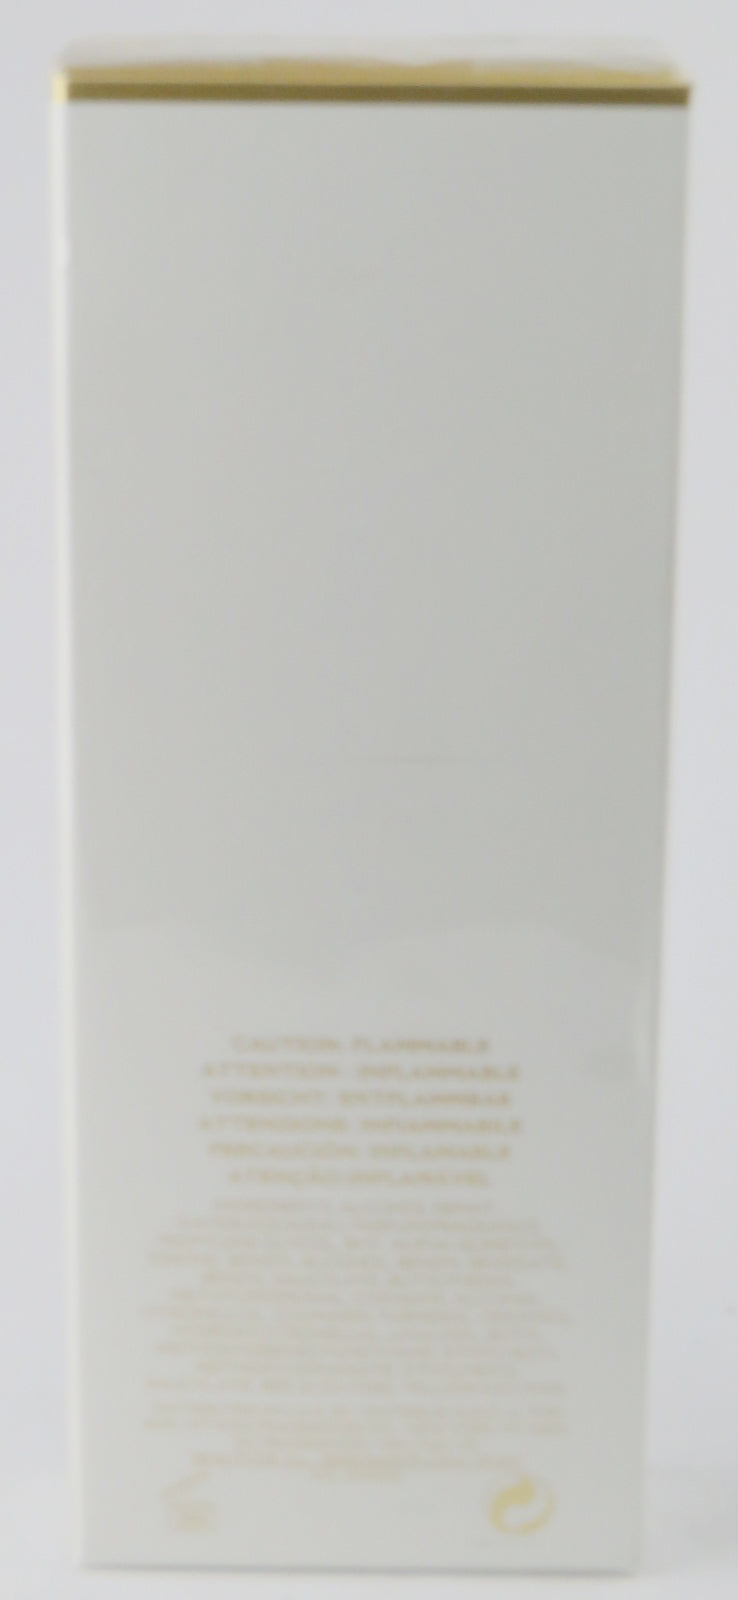 Perfume TRUE LOVE by Elizabeth Arden Eau De Toilette Spray 3.3 oz for Women - Banachief Outlet